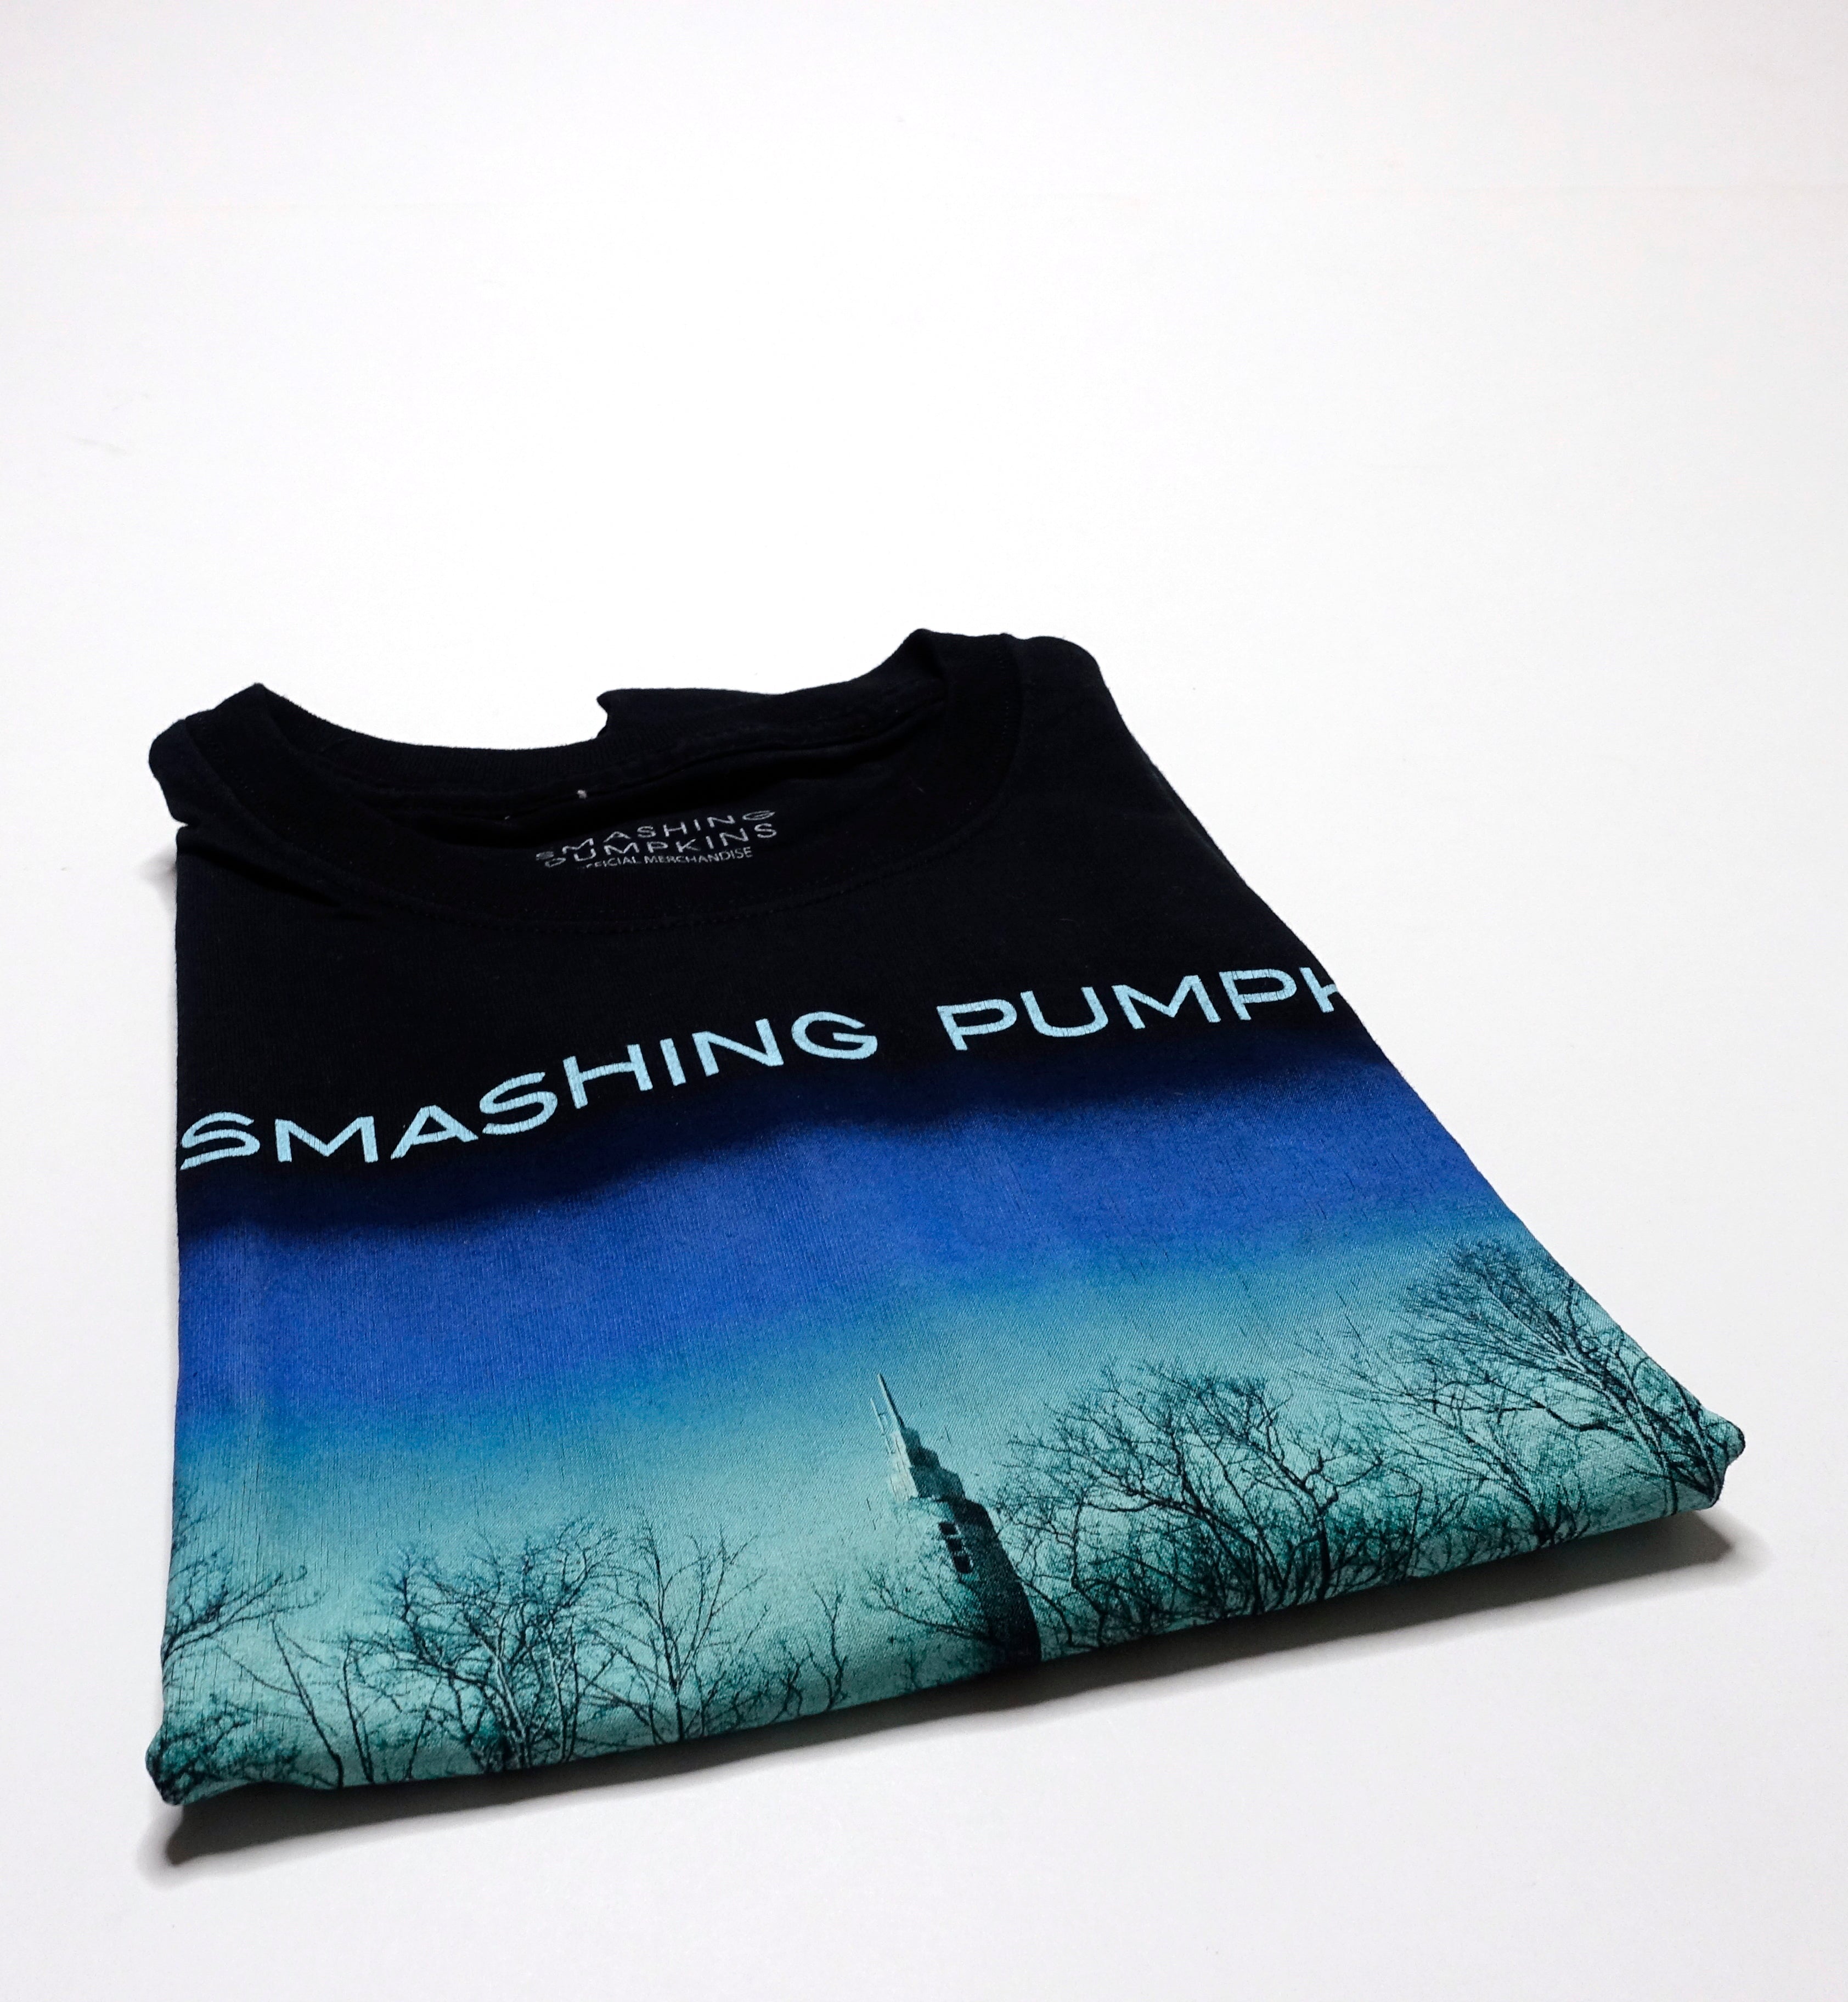 Smashing Pumpkins - Oceana 2012 Tour Shirt Size Large